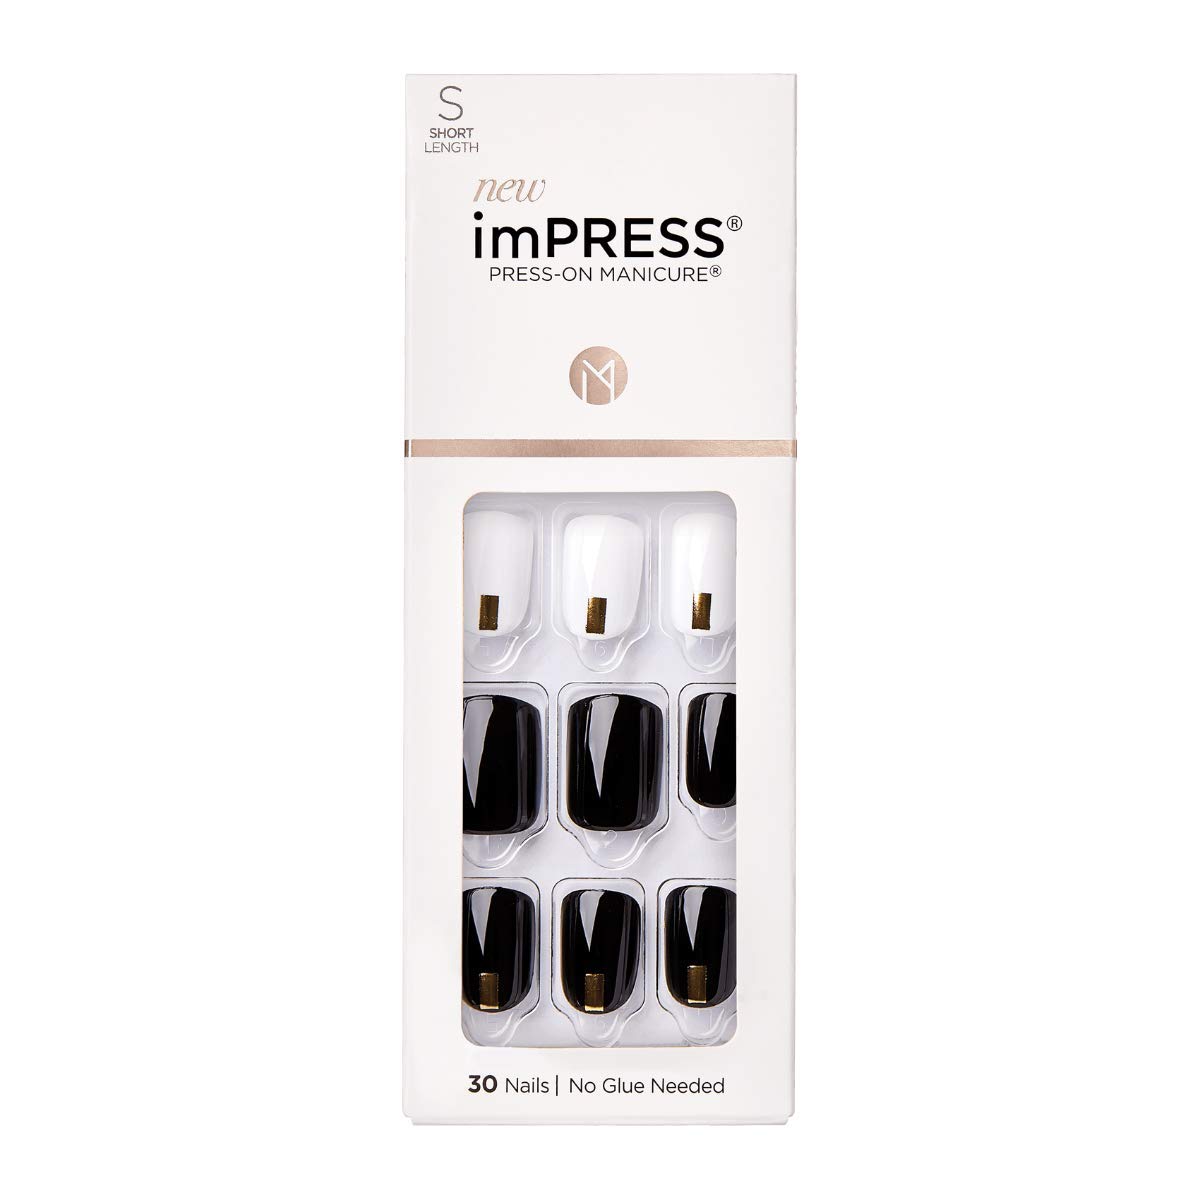 KISS imPRESS Press-On Manicure, Nail Kit, PureFit Technology, Short Press-On  Nails, Midnight Drive, Includes